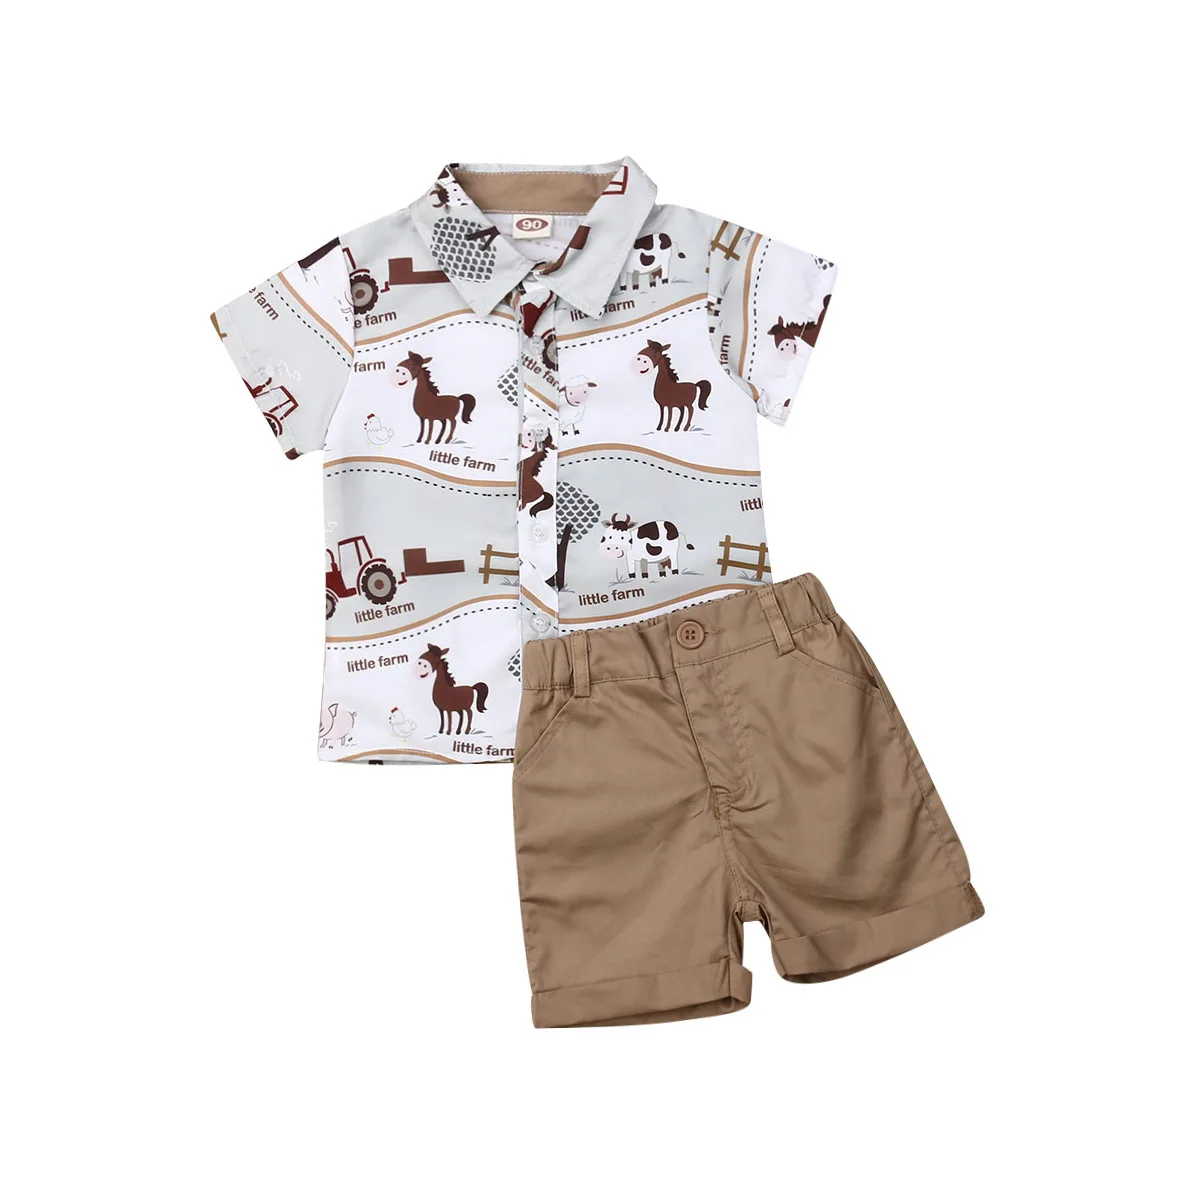 Pudcoco Summer Toddler Baby Boy Clothes Baby Horse Print Shirt Tops Short Pants 2Pcs Outfits Clothes Summer